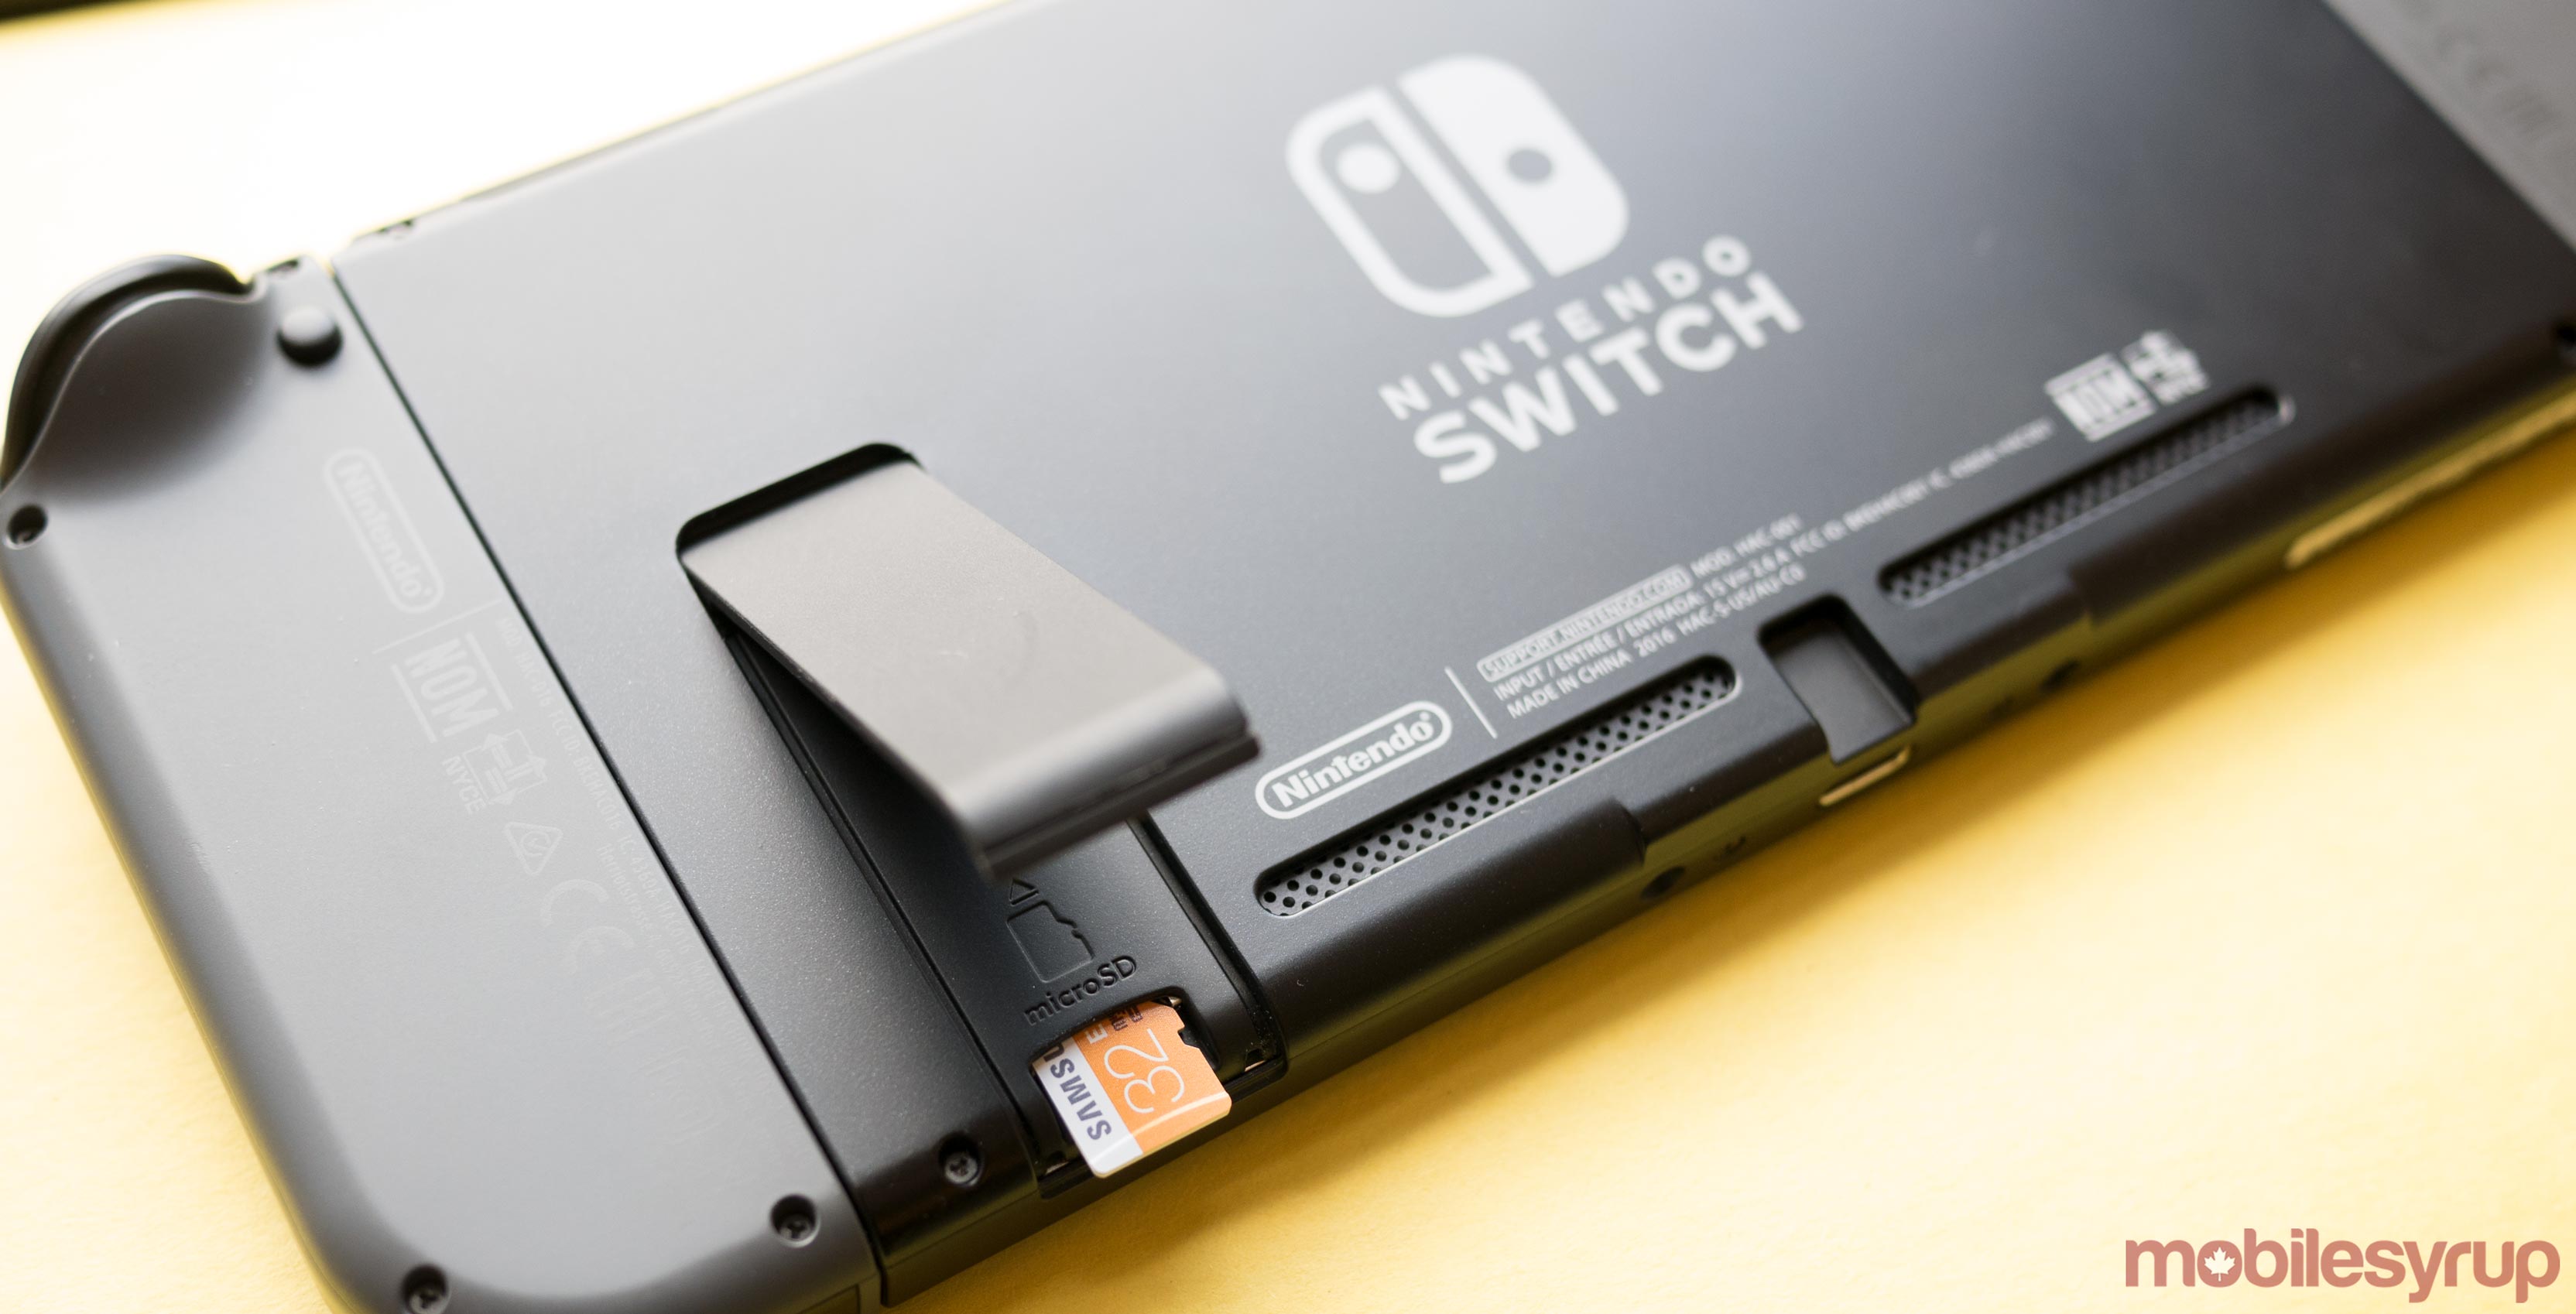 Nintendo Switch microSD card